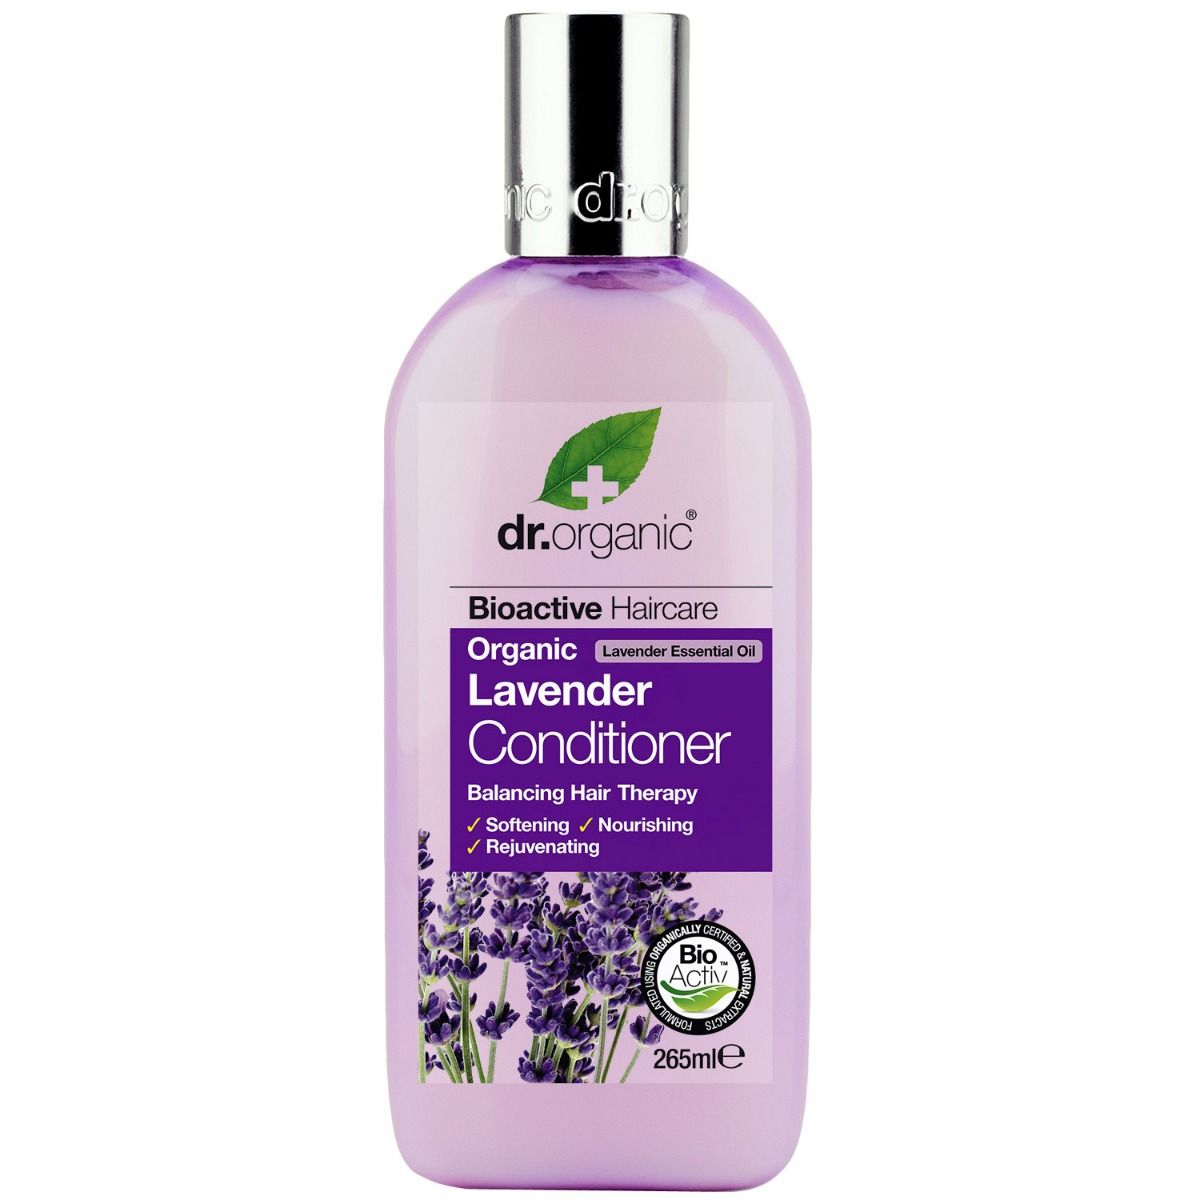 Buy dr.organic Lavender Conditioner, 265 ml Online